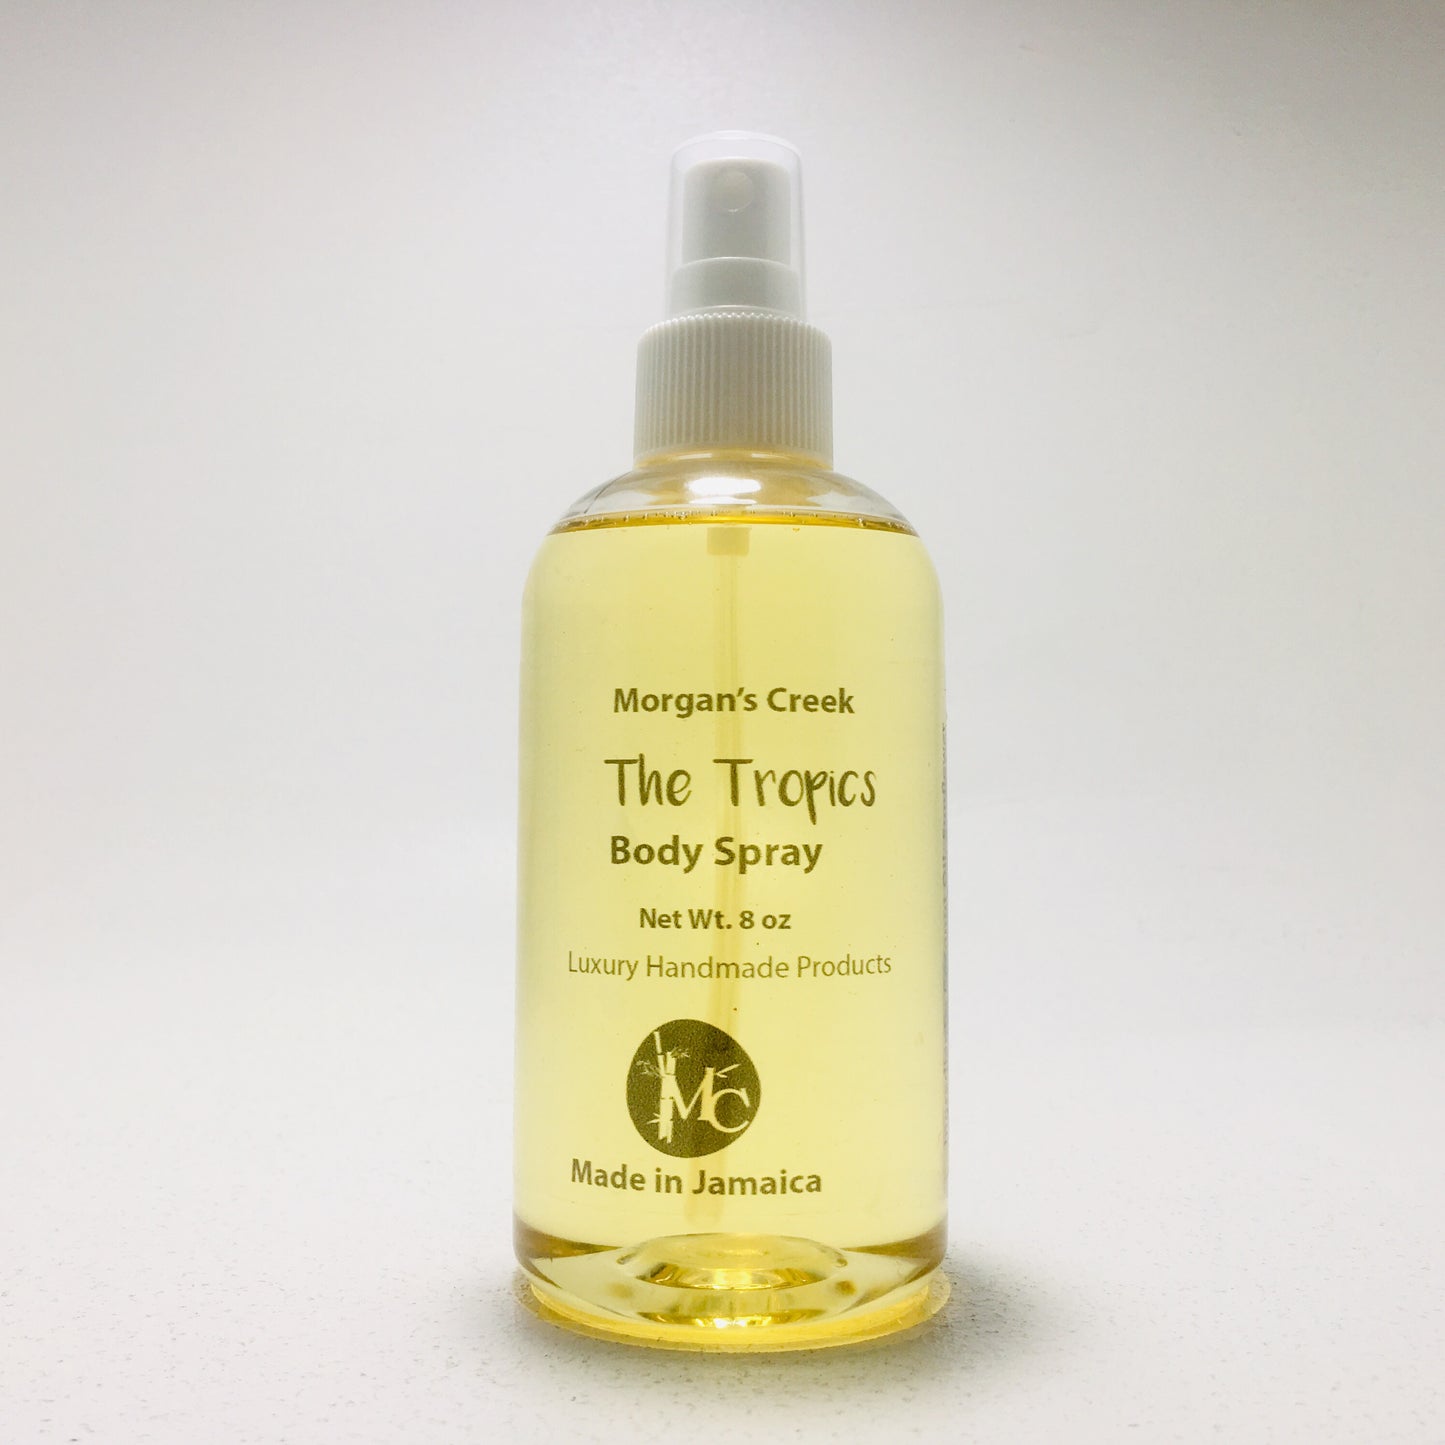 The Tropics Body Spray